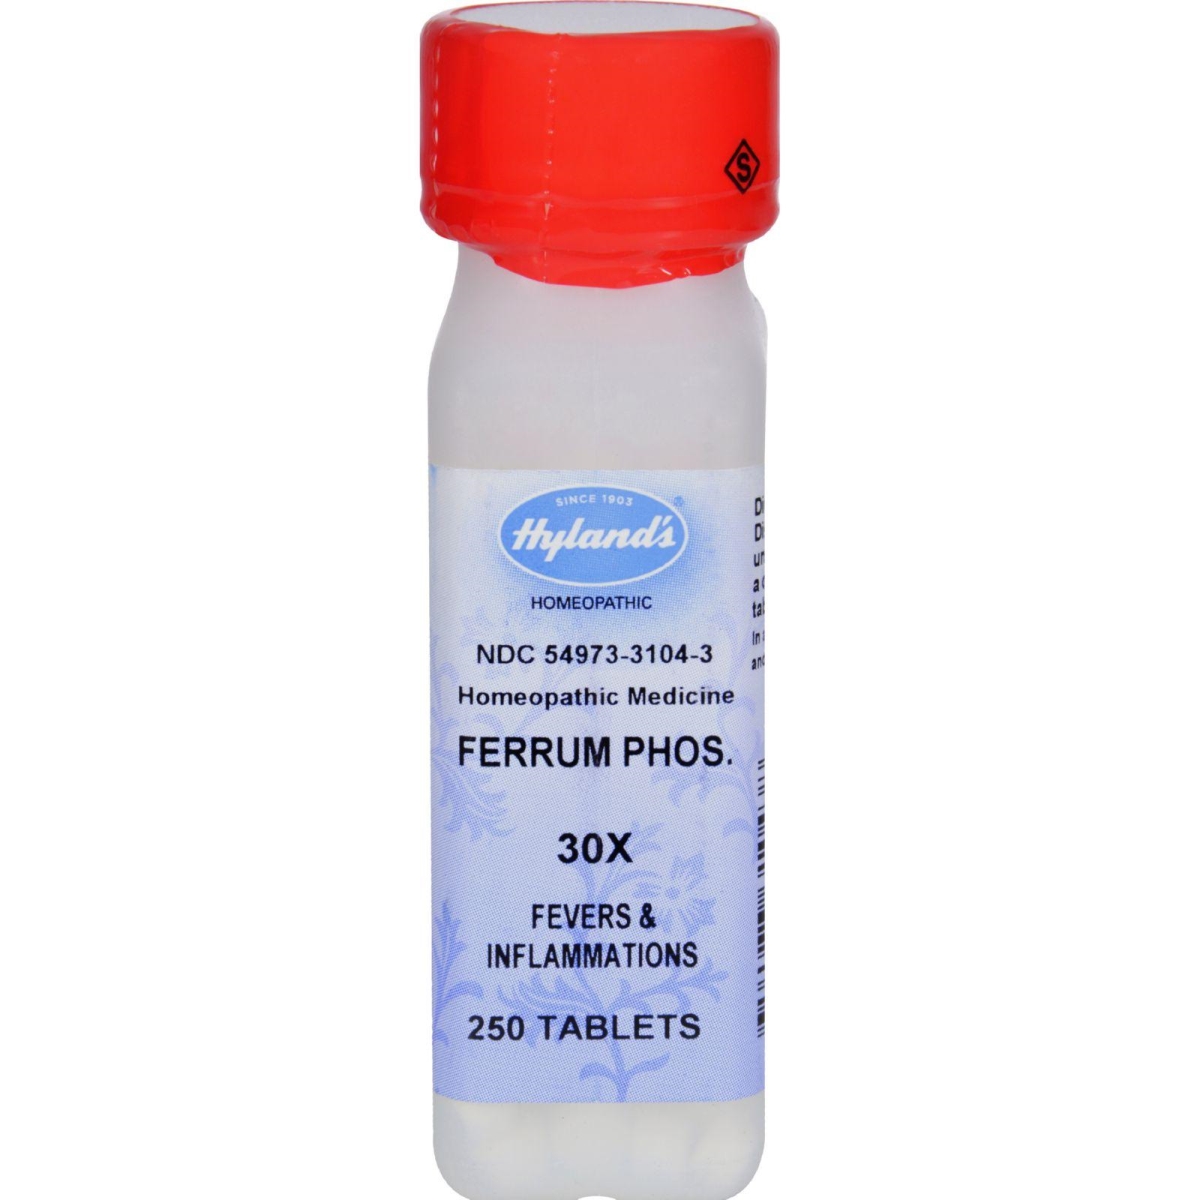 Hg1520287 Homepathic Ferrum Phos 30x - 250 Tablets